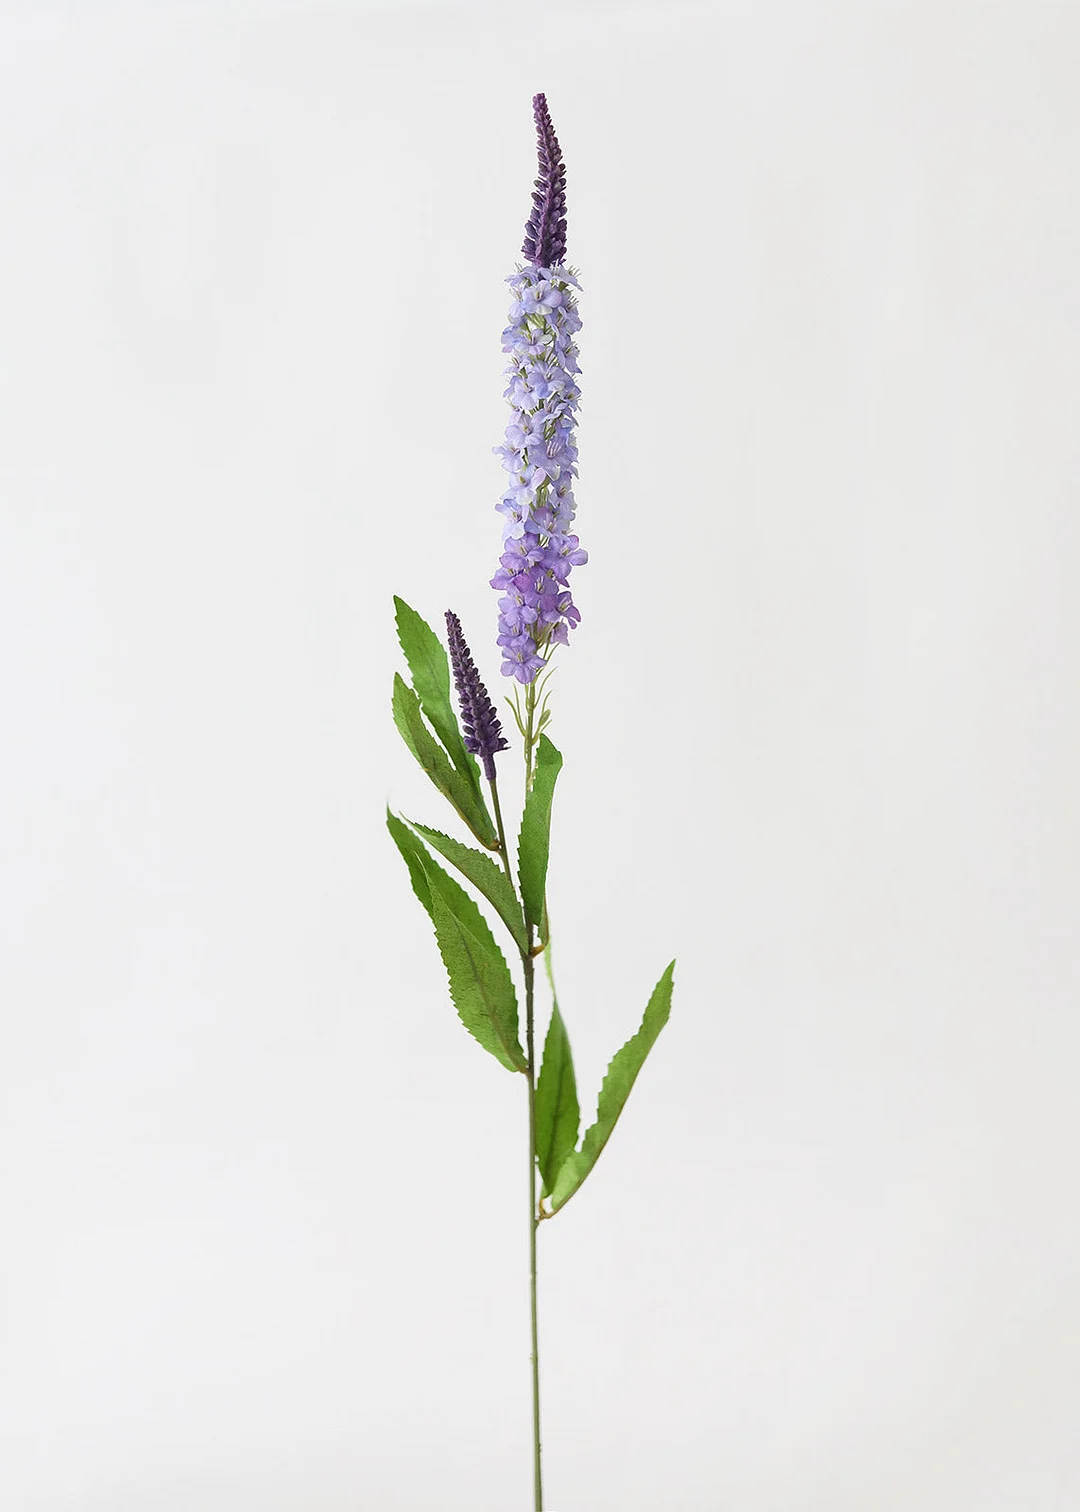 Veronica Artificial Flower in Lavender - 30"